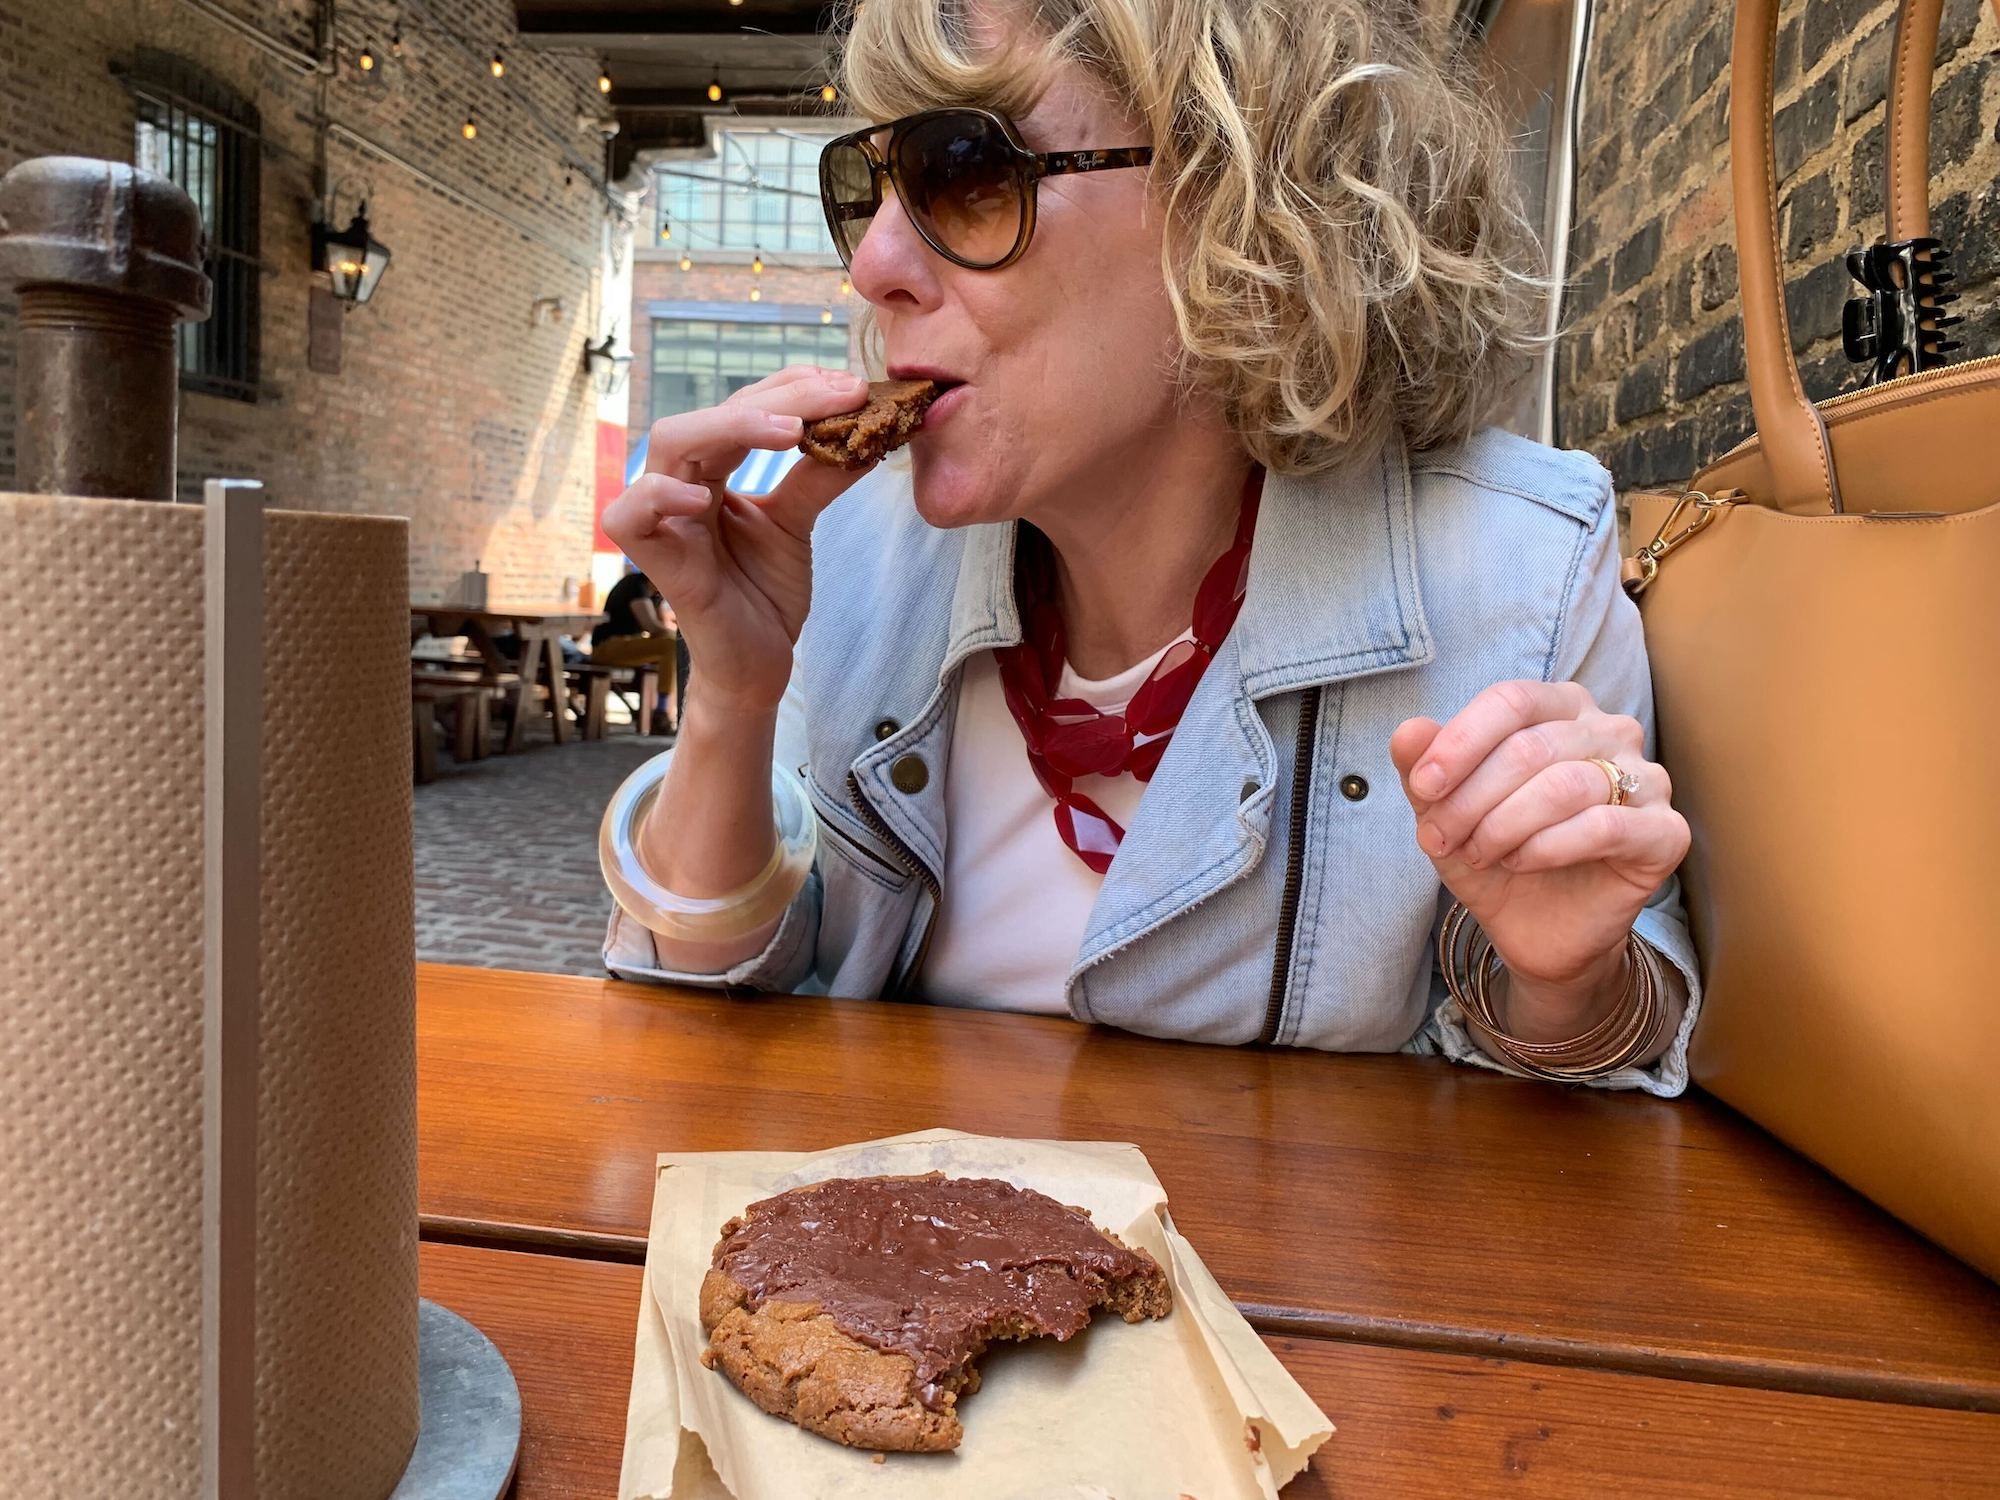 woman eating cookie, wearing sunglasses